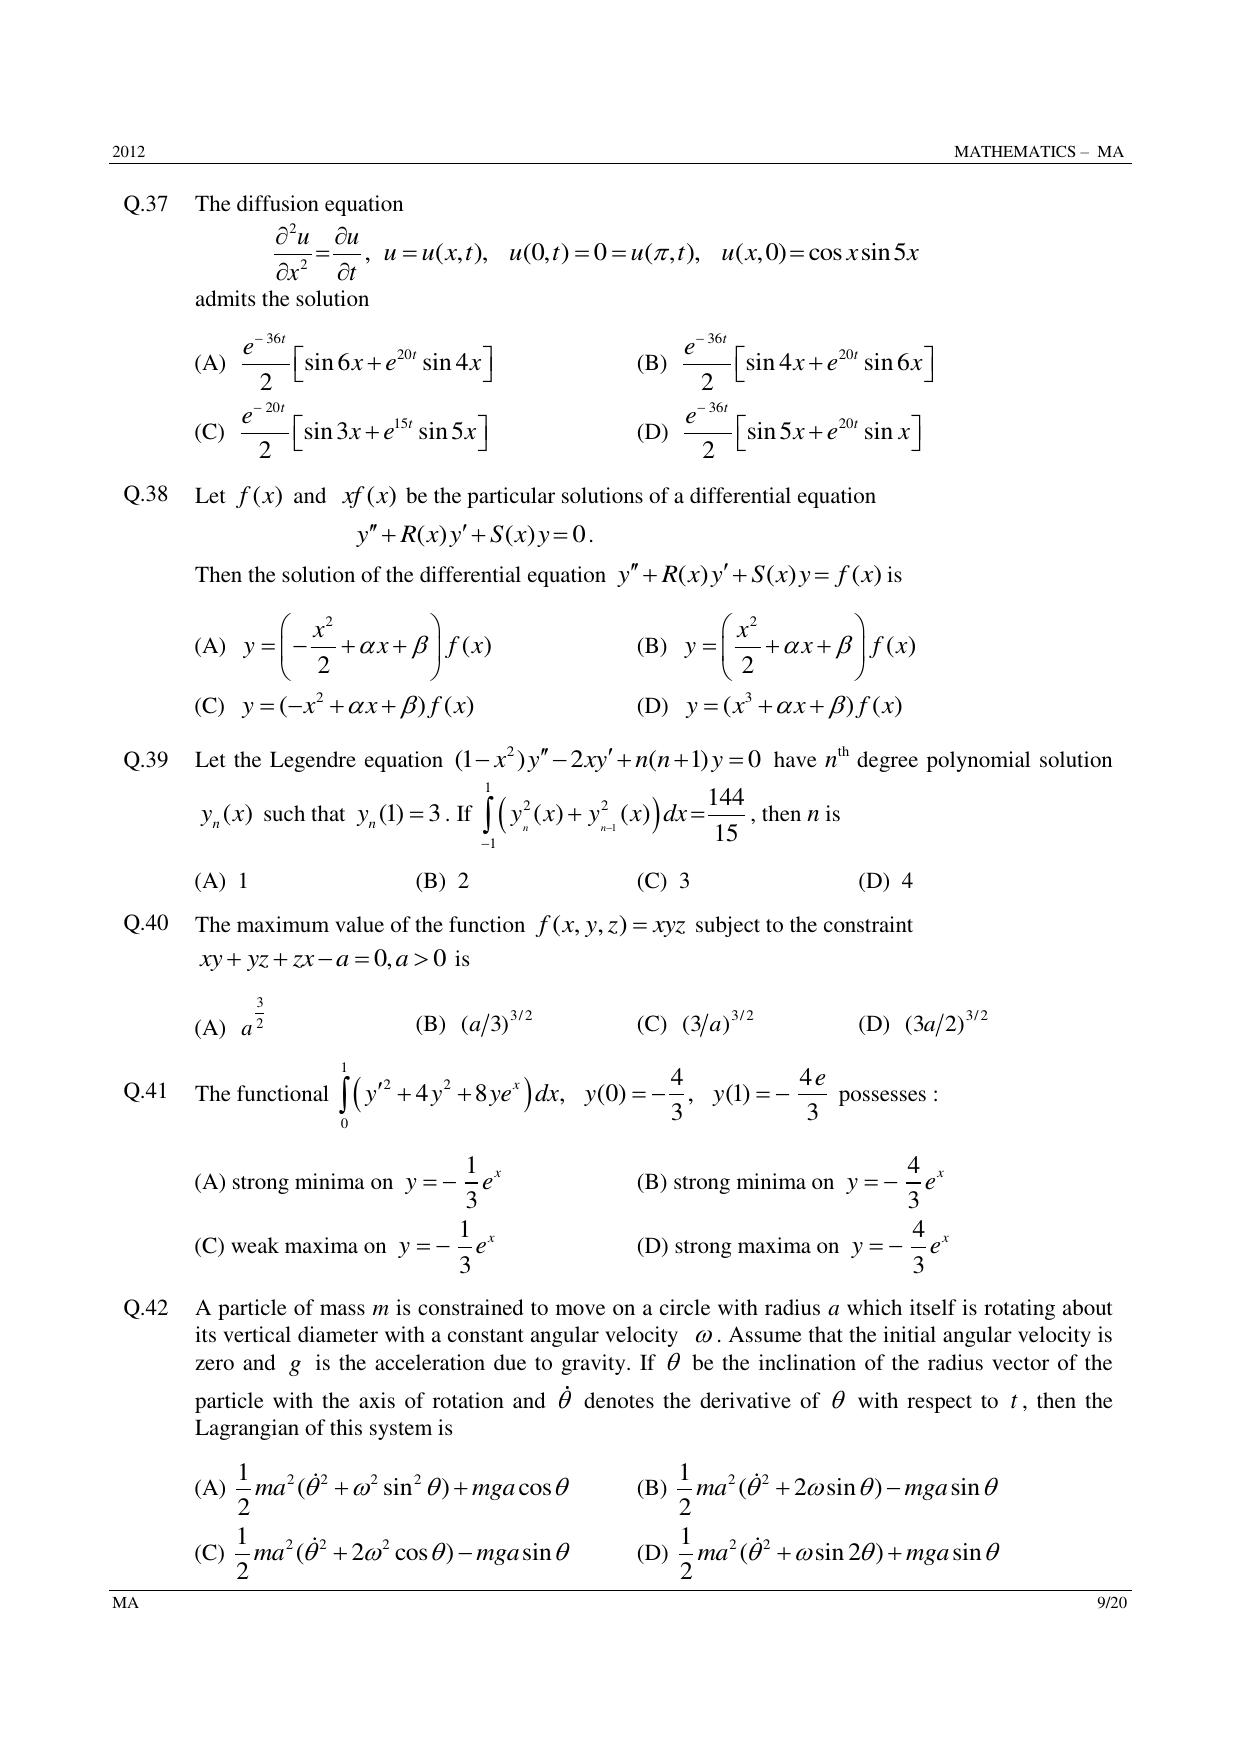 GATE 2012 Mathematics (MA) Question Paper with Answer Key - Page 9